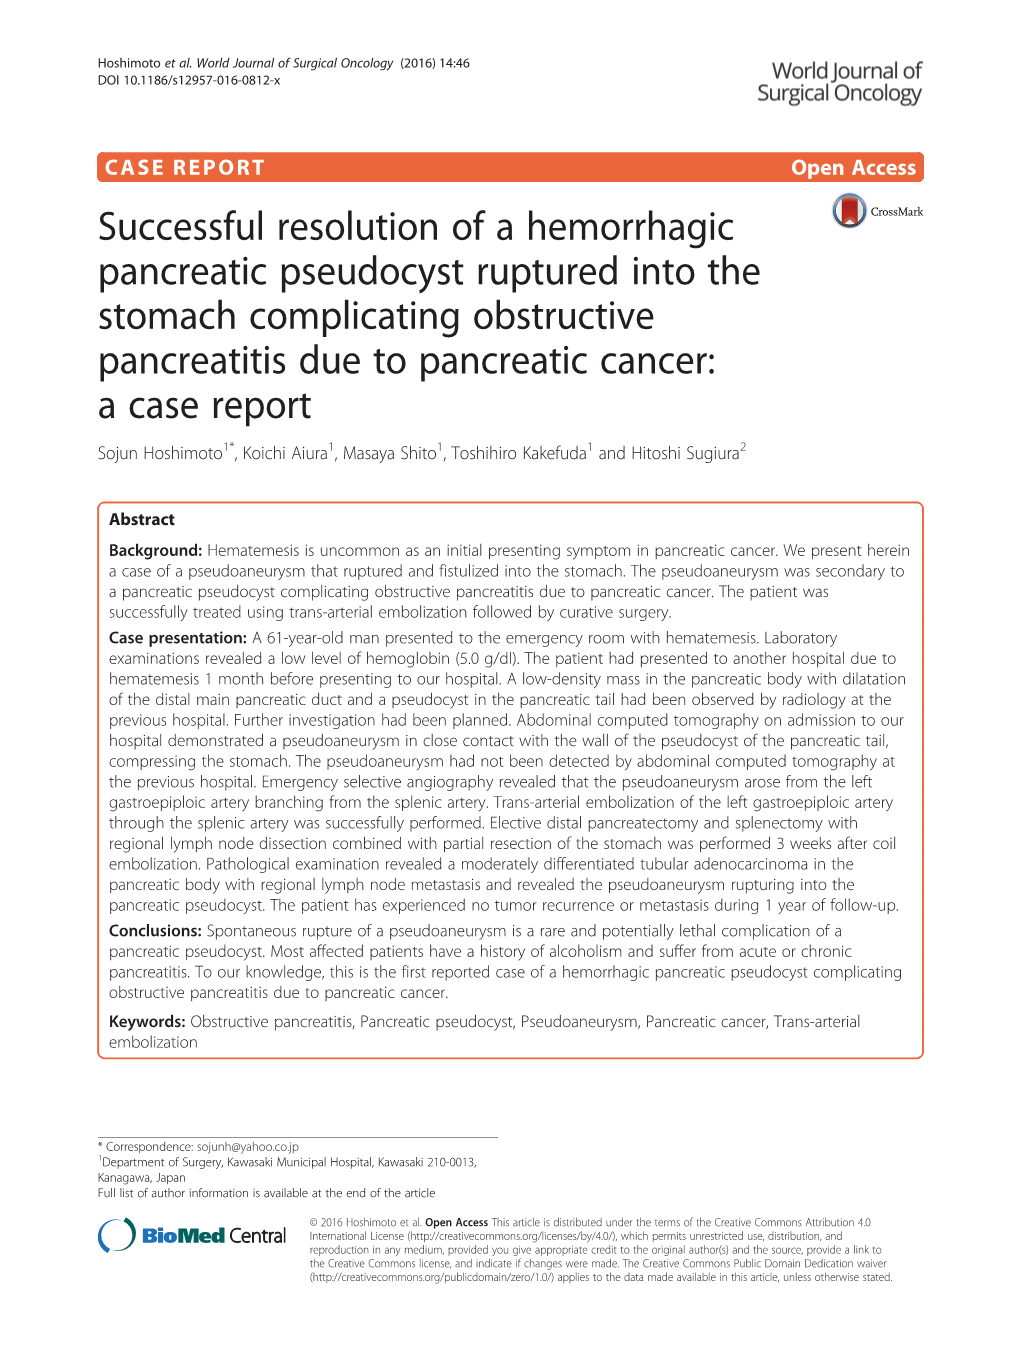 Successful Resolution of a Hemorrhagic Pancreatic Pseudocyst